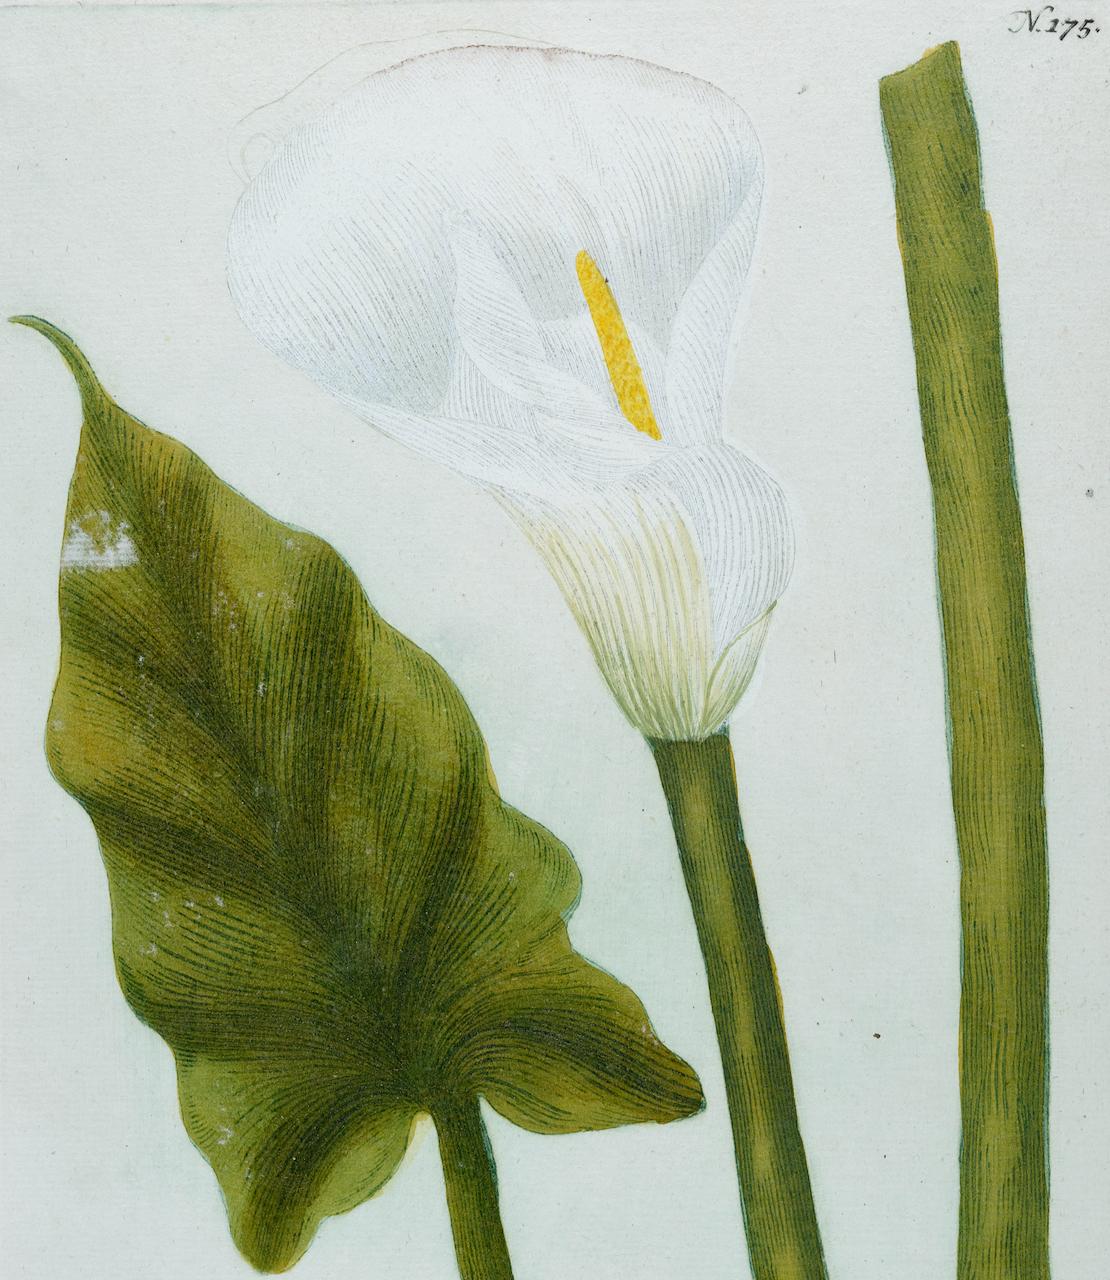 Calla Lily 2: An 18th Century Hand-colored Botanical Engraving by J. Weinmann - Naturalistic Print by Johann Wilhelm Weinmann